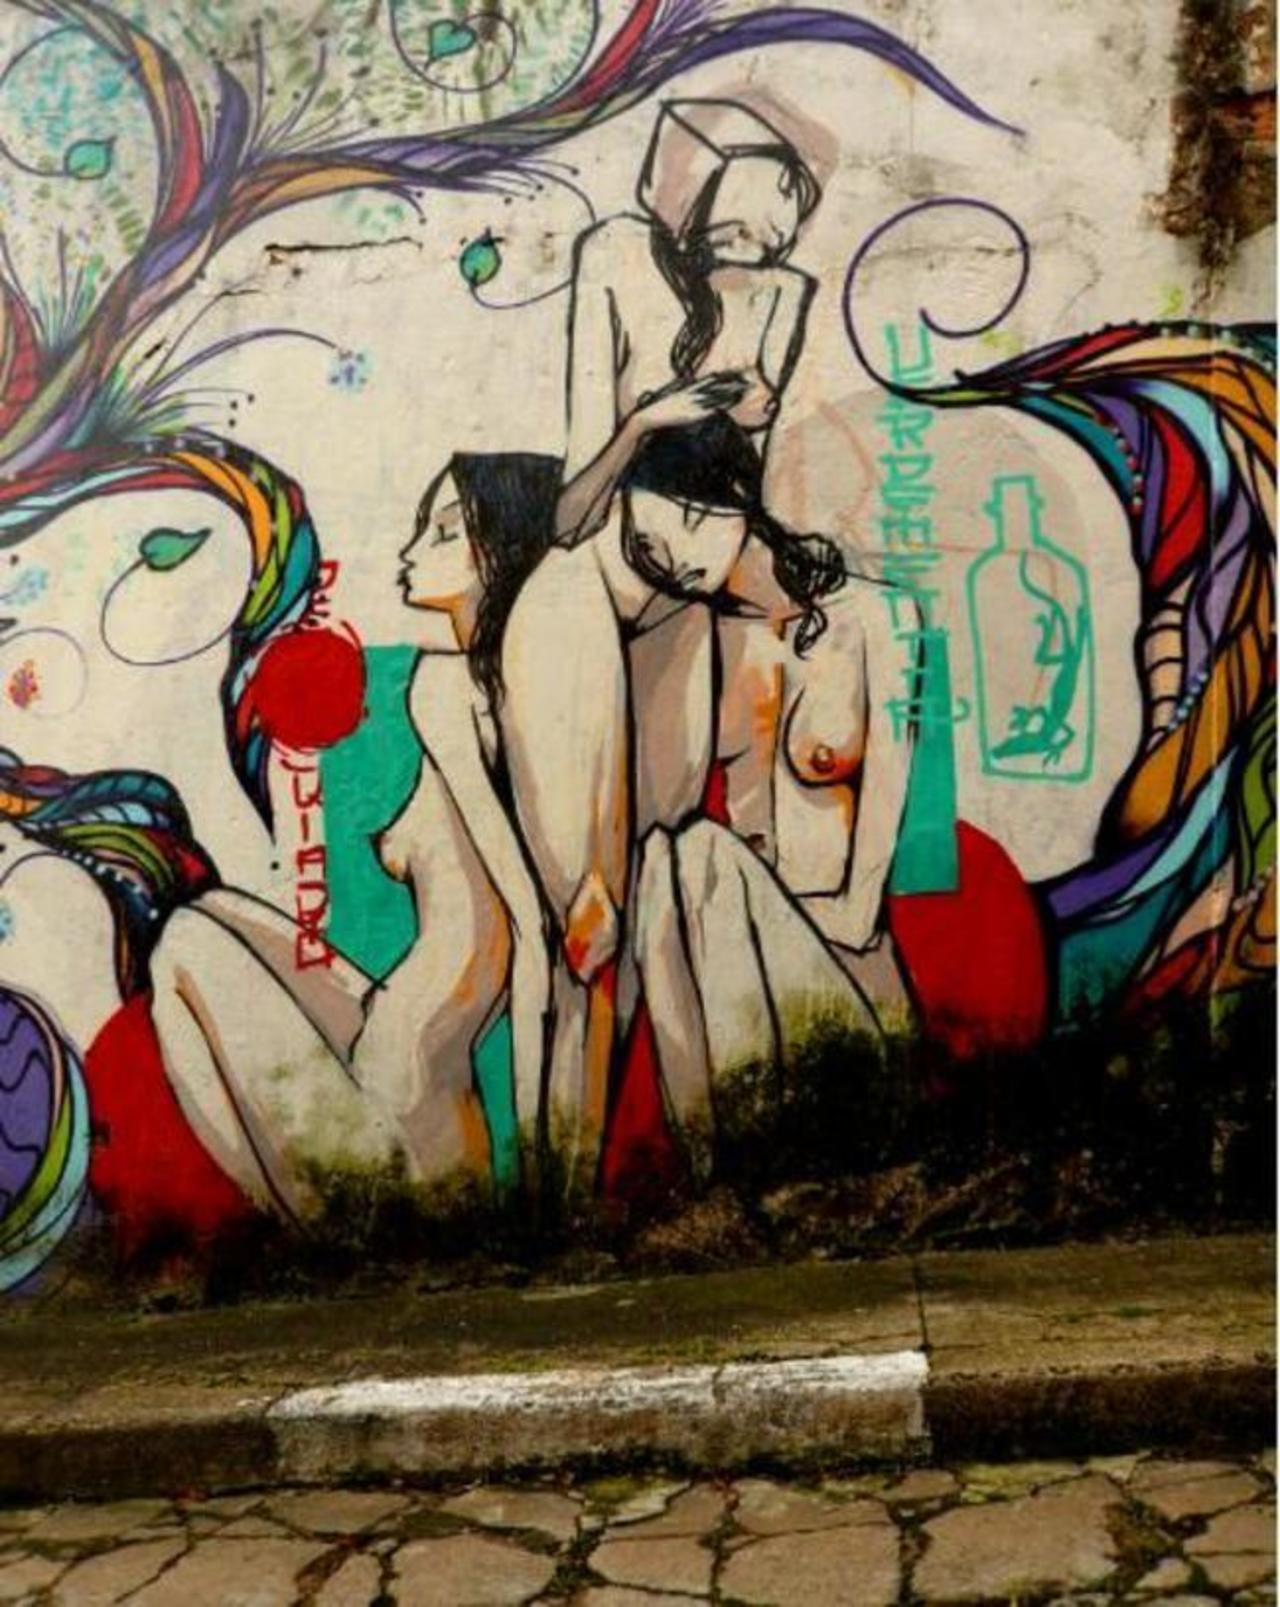 RT @5putnik1: Picasso on Absynthe  • #streetart #graffiti #art #funky #dope . : http://t.co/0aqcPvII44